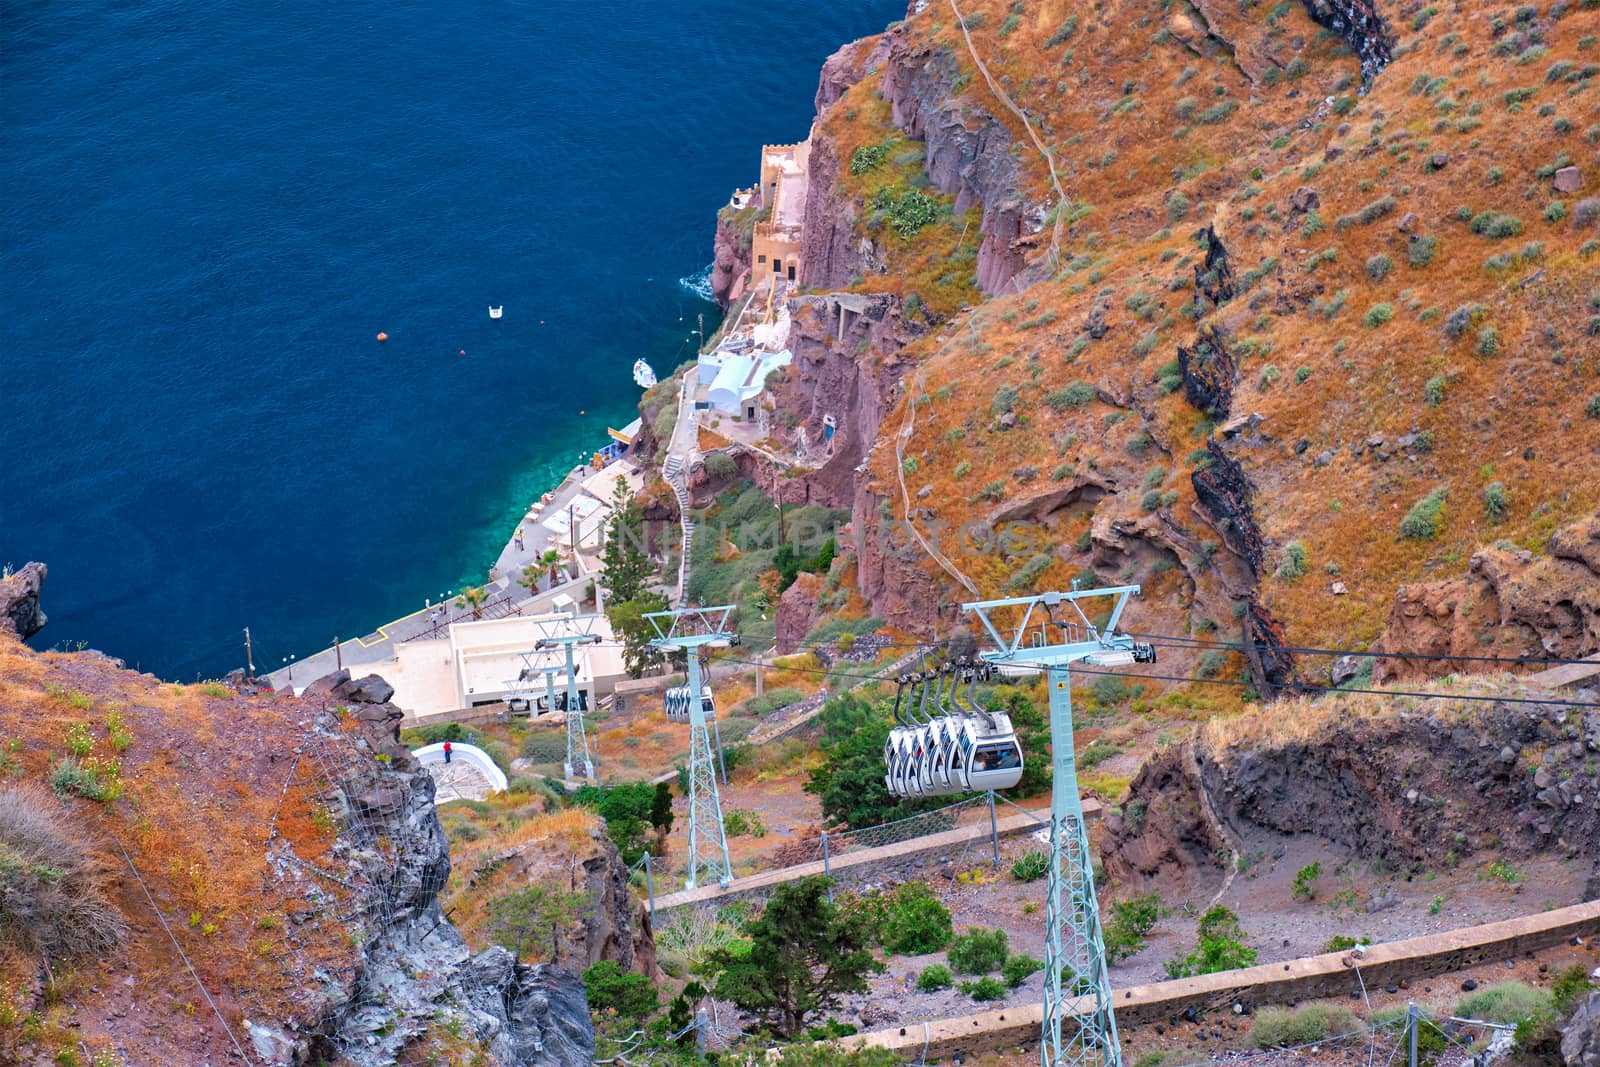 Cable car lift in Fira on Santorini island, Greece by dimol